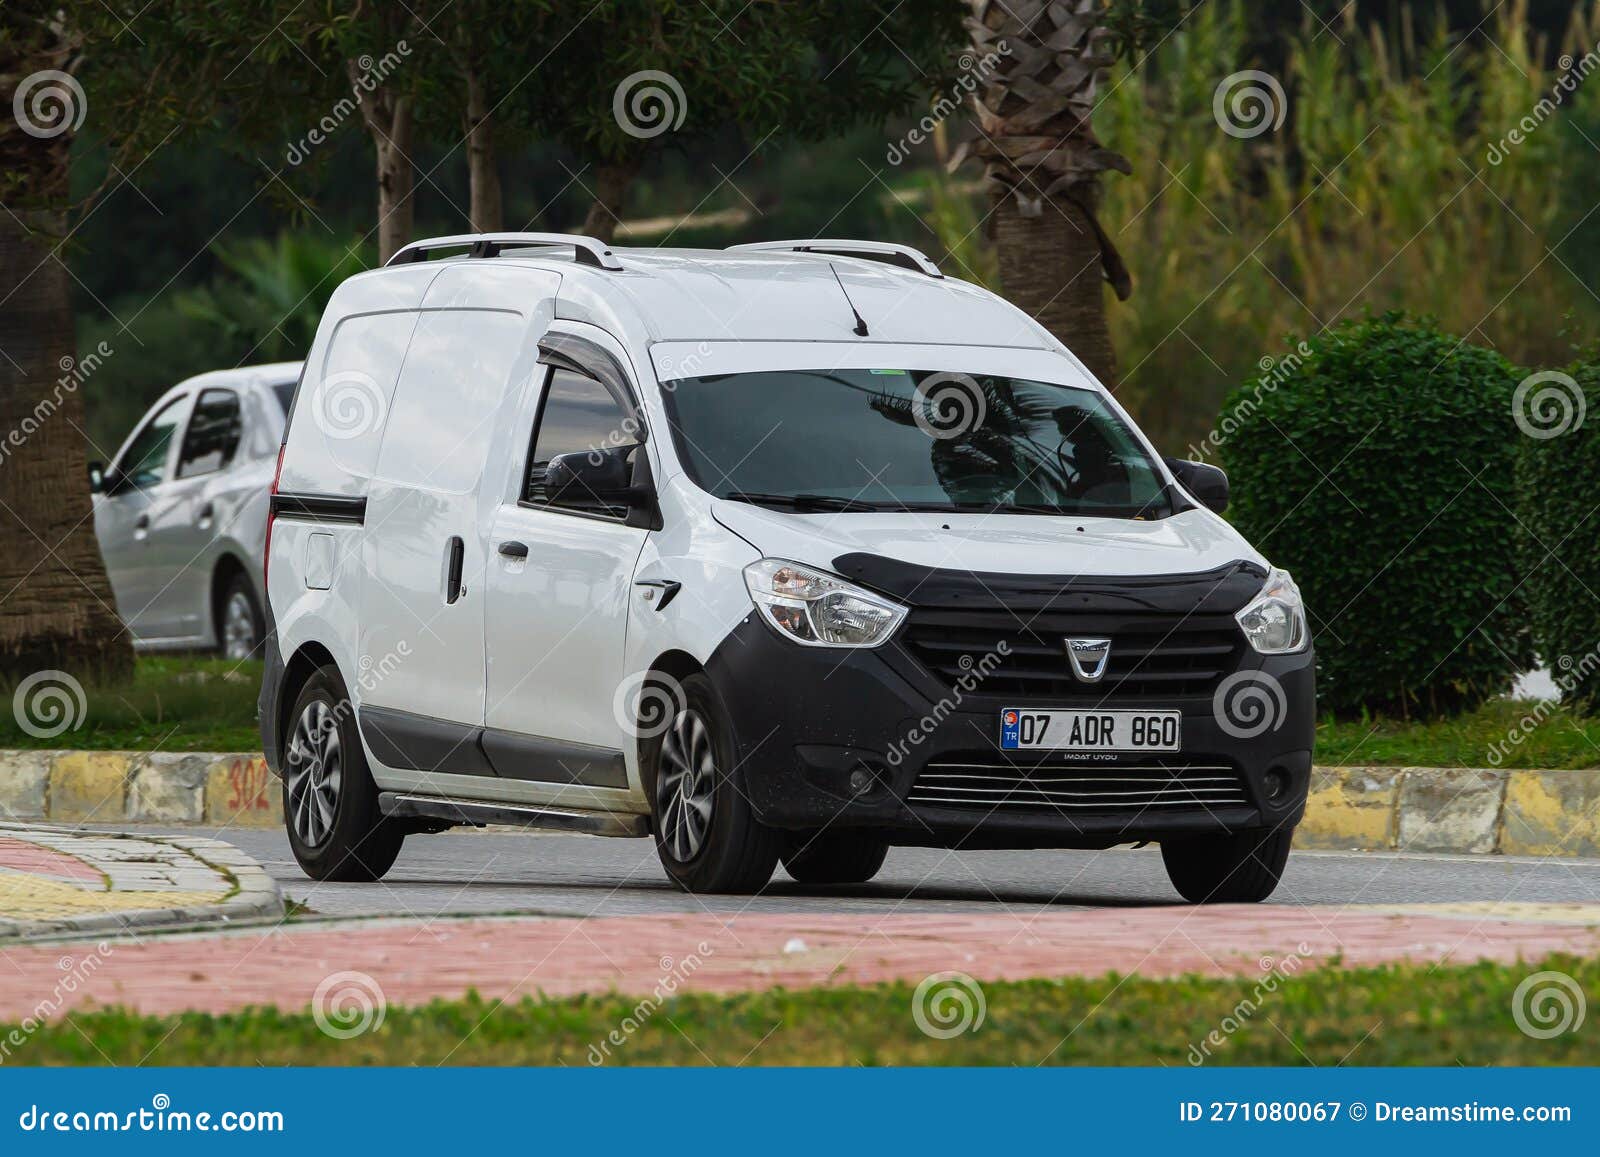 Dacia Dokker vs Renault Kangoo - Blog Vivacar.fr